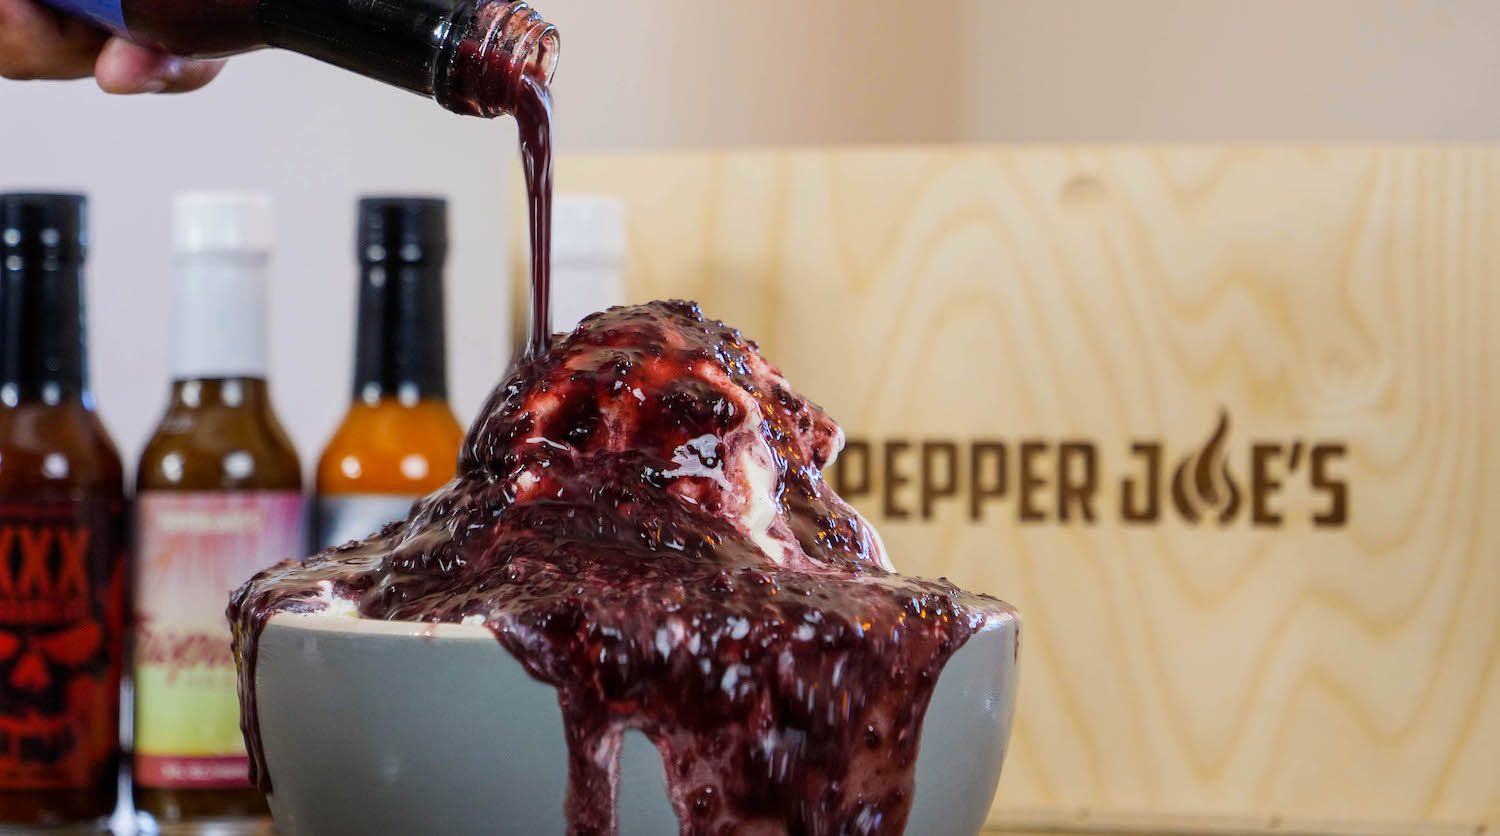 Pepper Joe's Carolina Reaper hot sauce collection - Blueberry Reaper hot sauce pour on ice cream